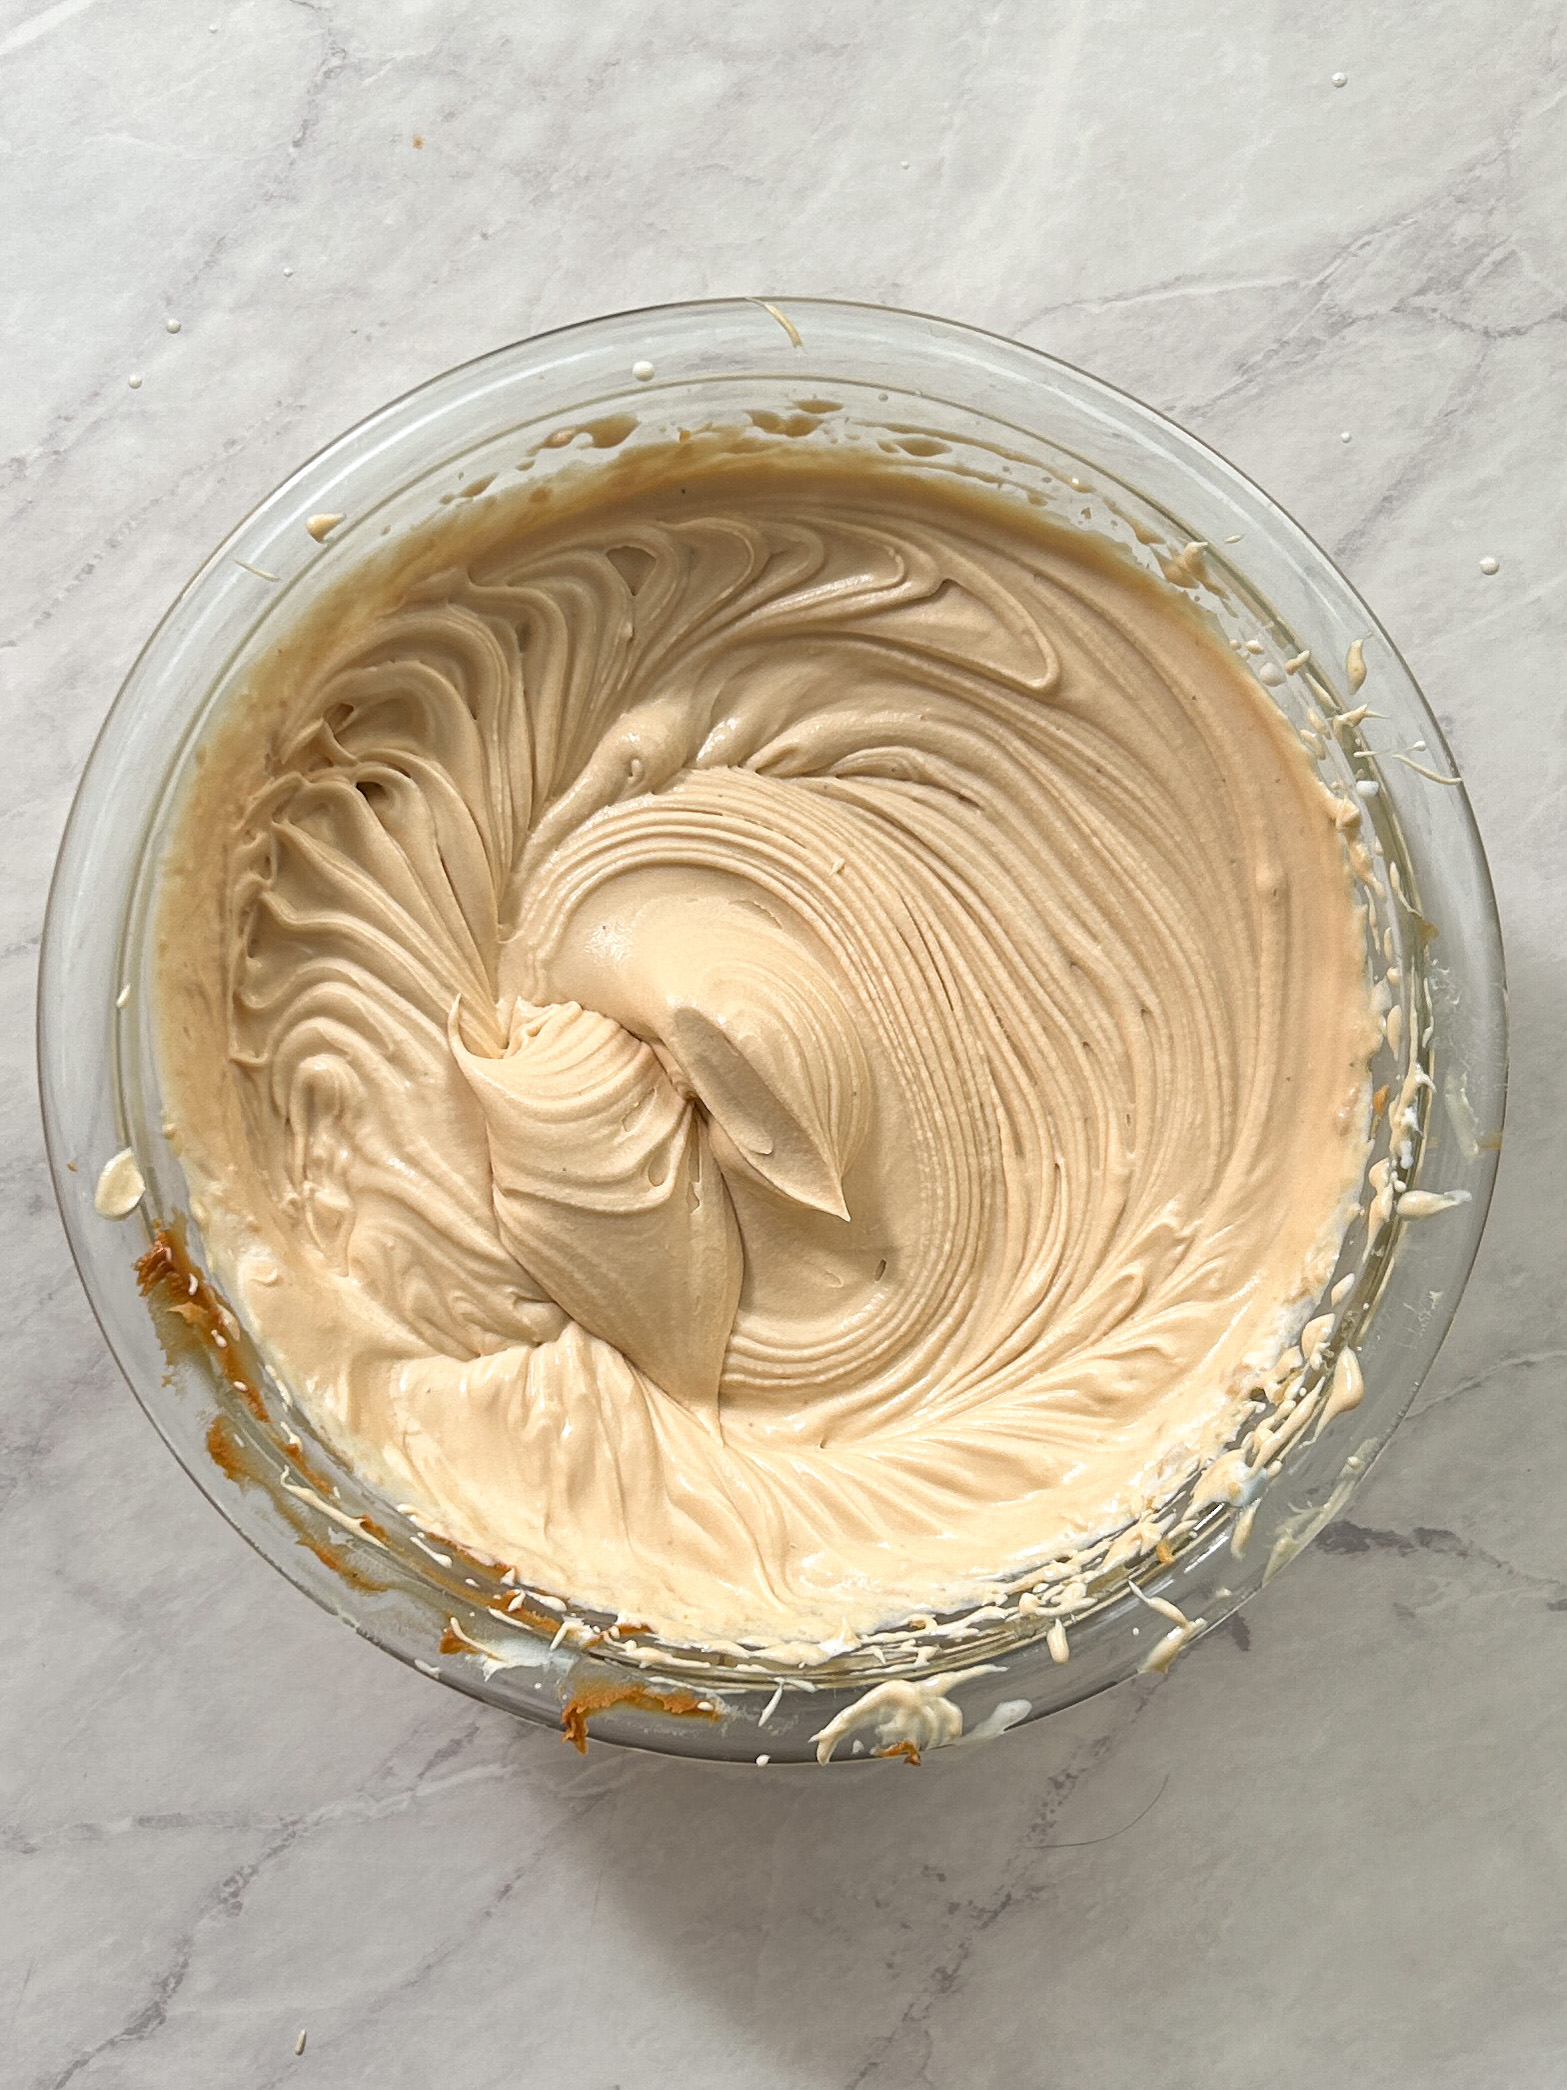 biscoff mascarpone cream whipped to stiff peaks in a glass bowl